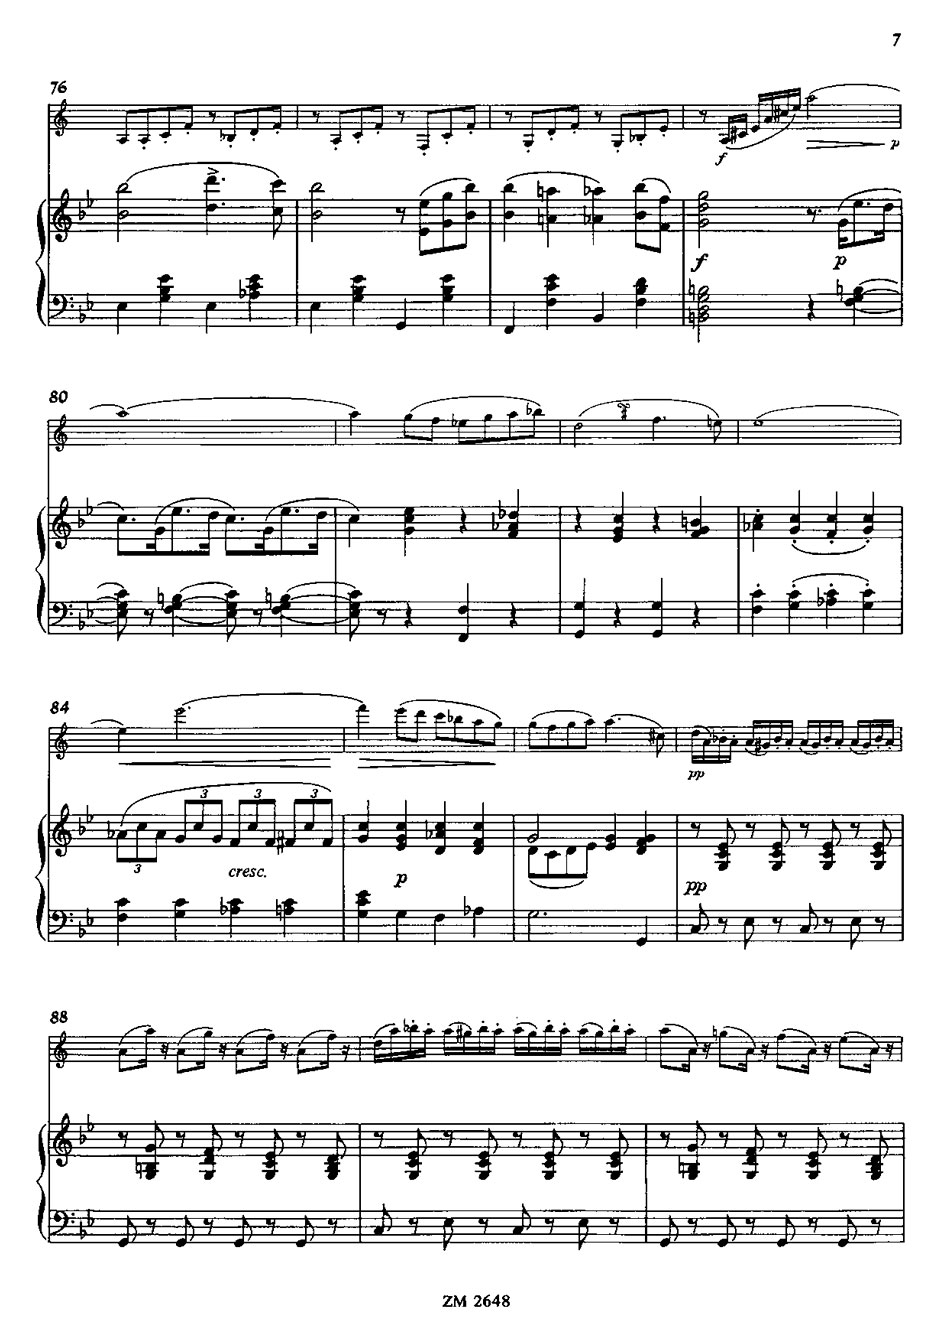 franz-schubert-sonate-arpeggione-d-821-a-moll-clr-_0006.JPG